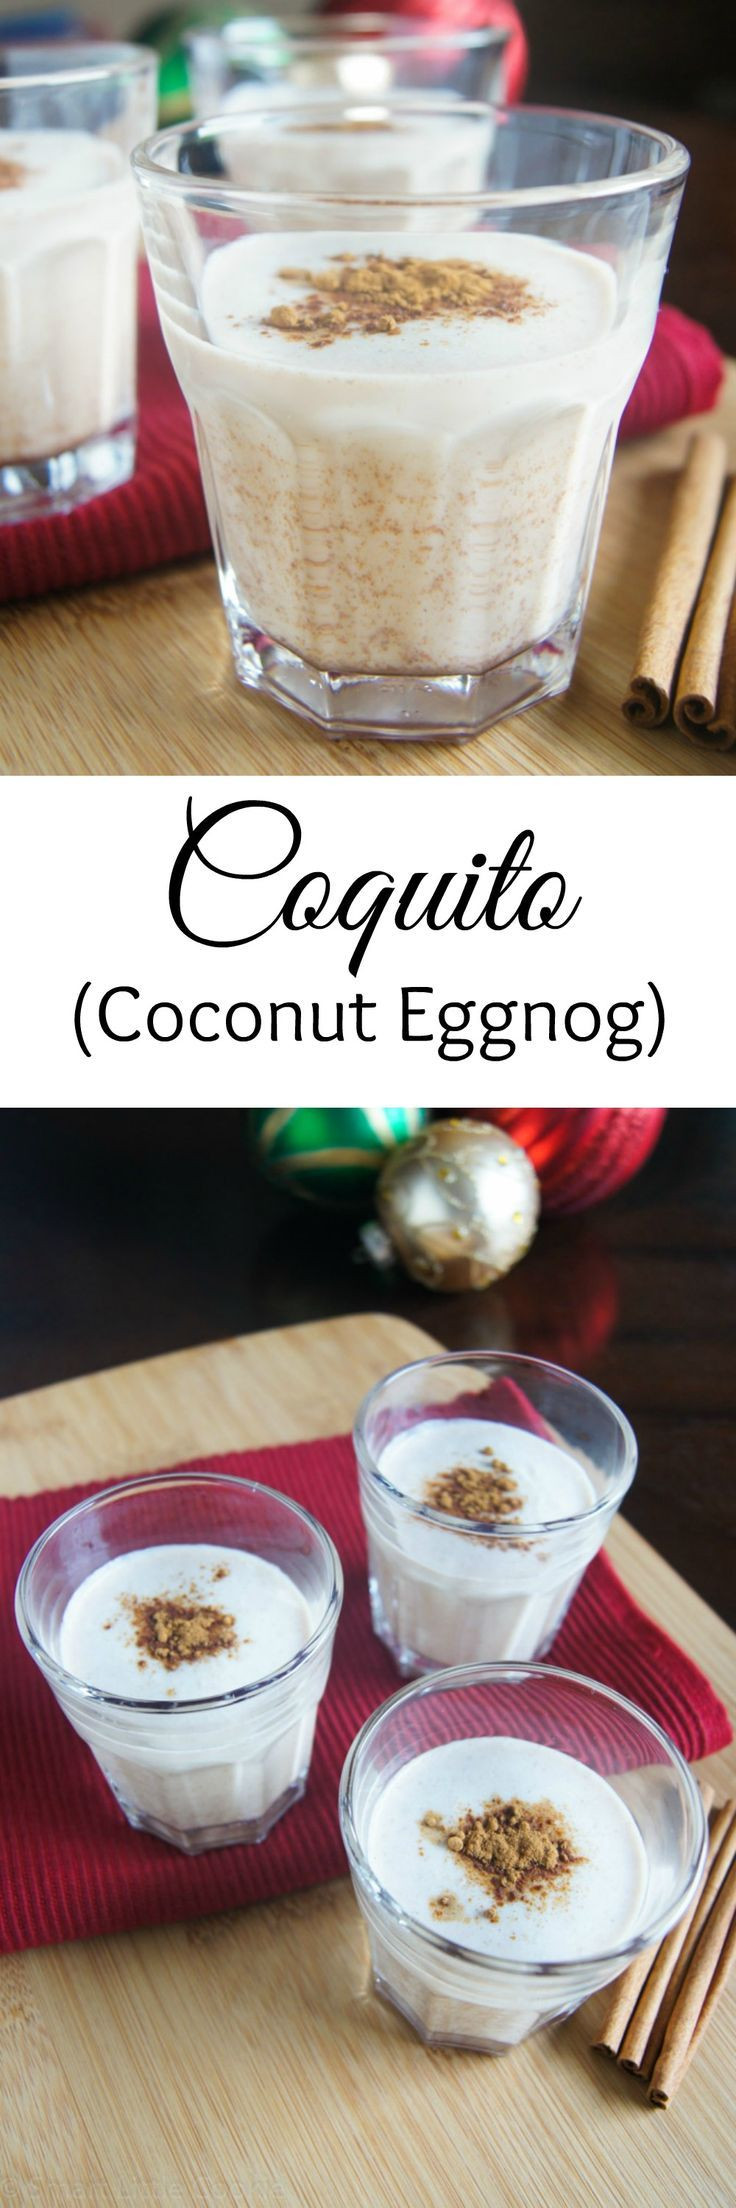 Puerto Rican Christmas Desserts
 Coquito Coconut Eggnog